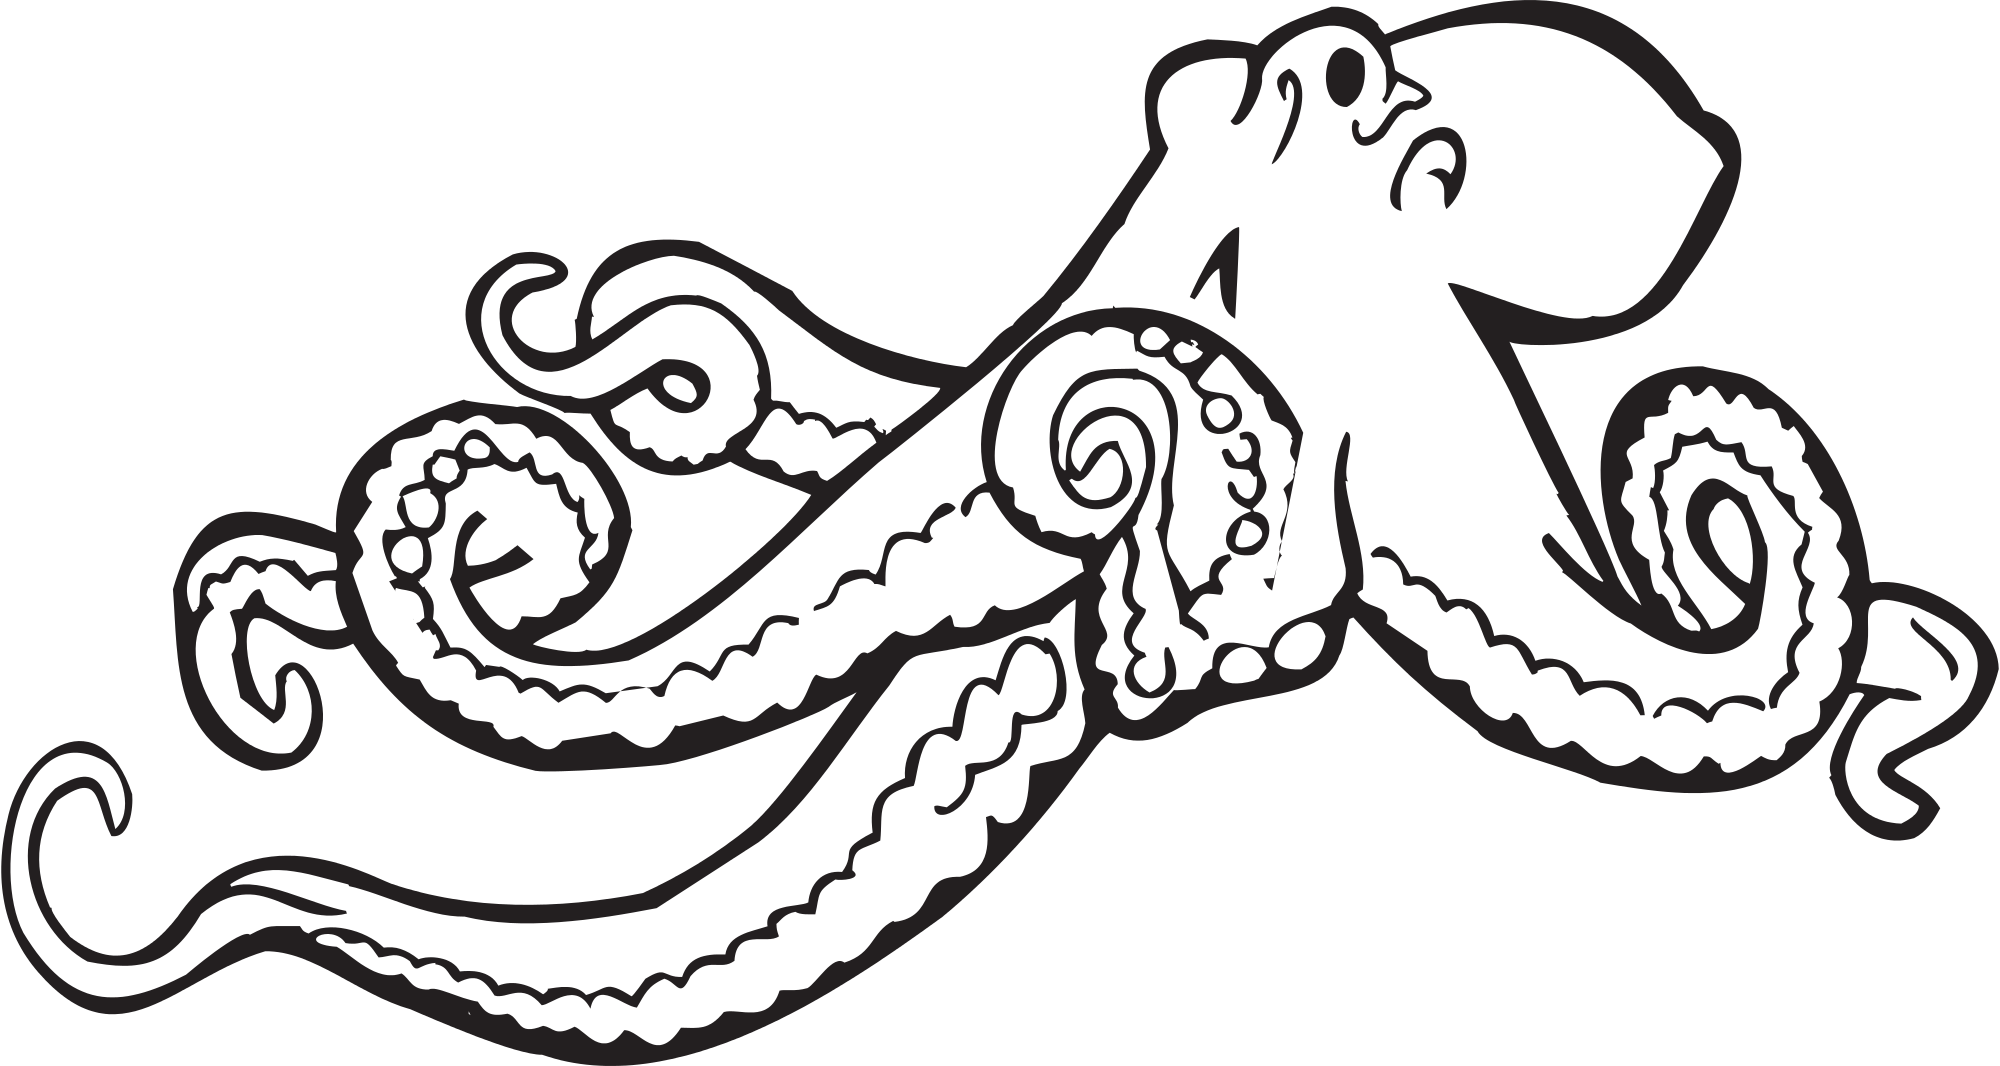 Octopus clipart illustrations